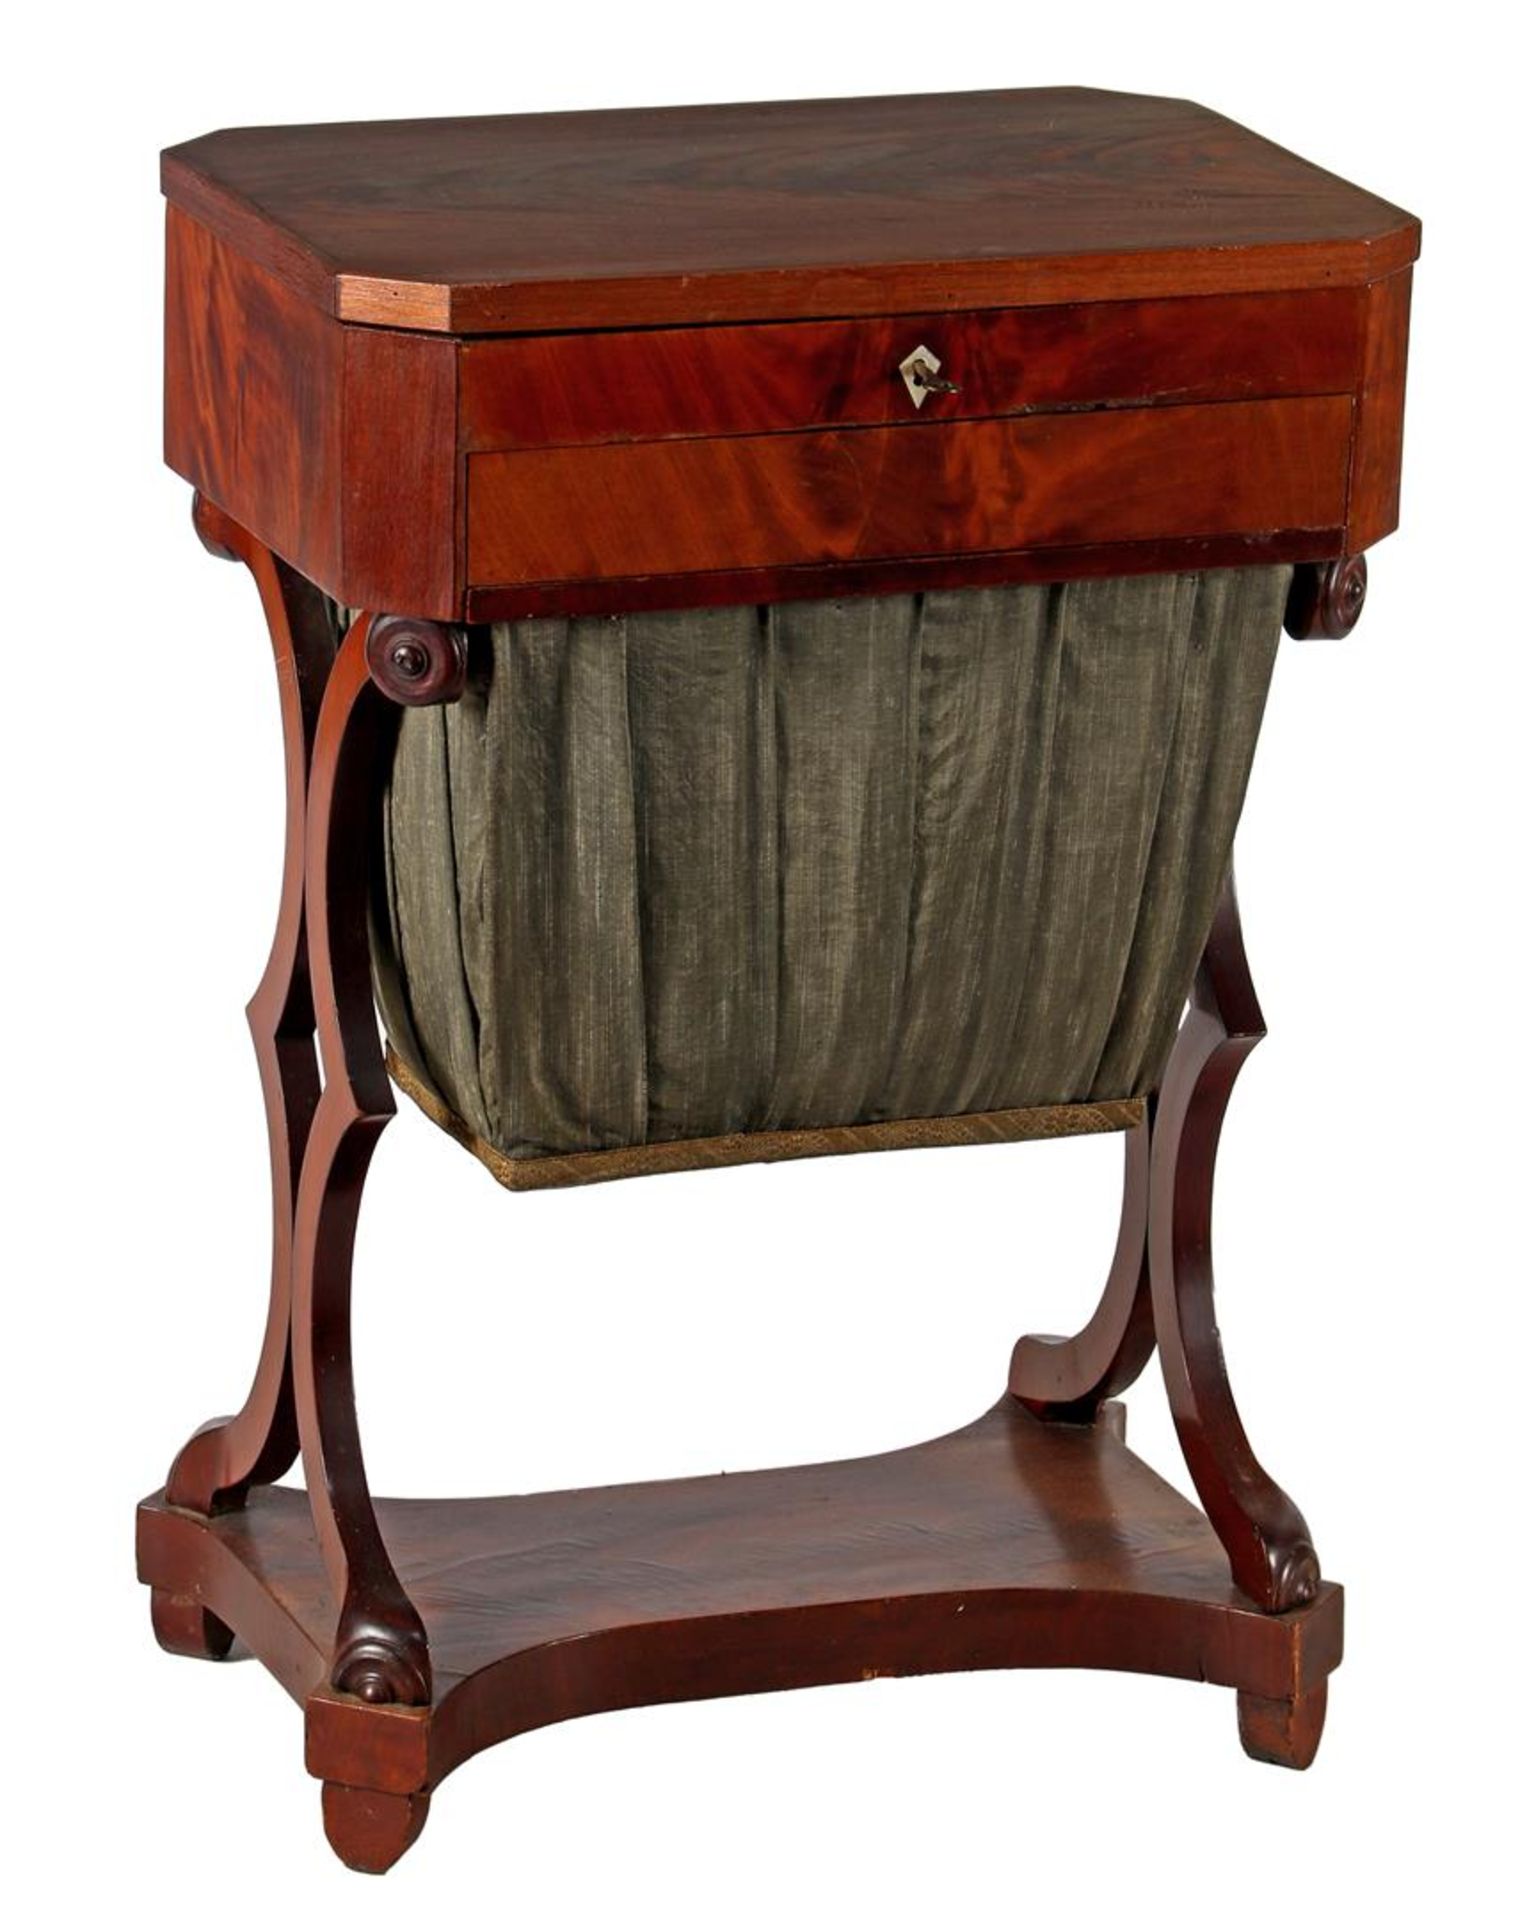 Mahogany veneer craft furniture with wool bag, ca. 1890